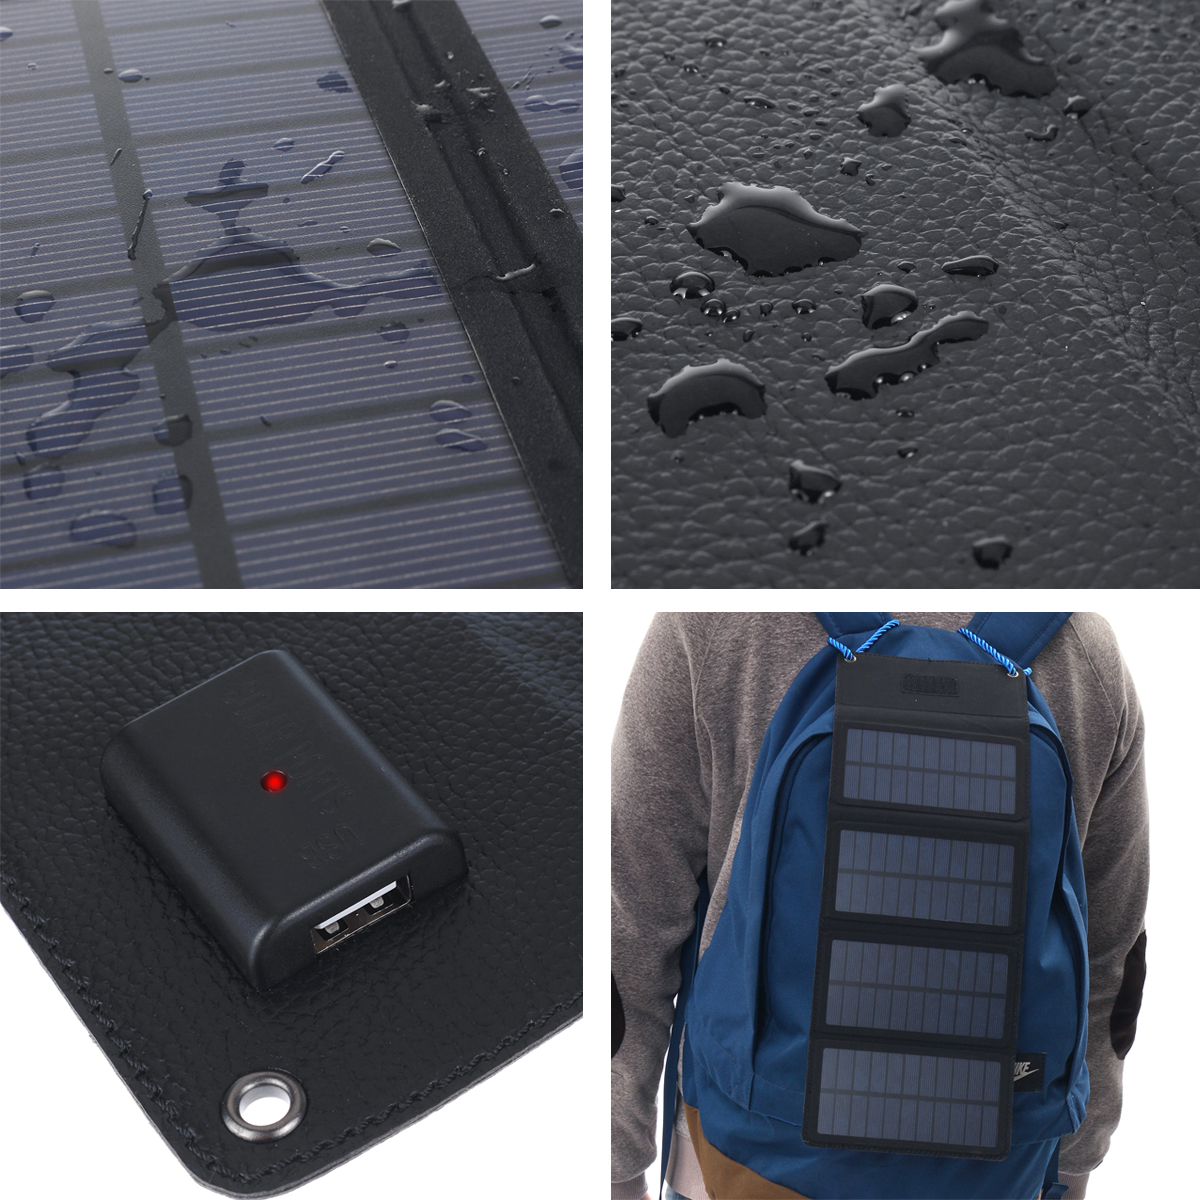 7W 5V Waterproof Foldable Mono-crystalline Silicon Solar Panel With LED Charging indicator & USB Interface 15